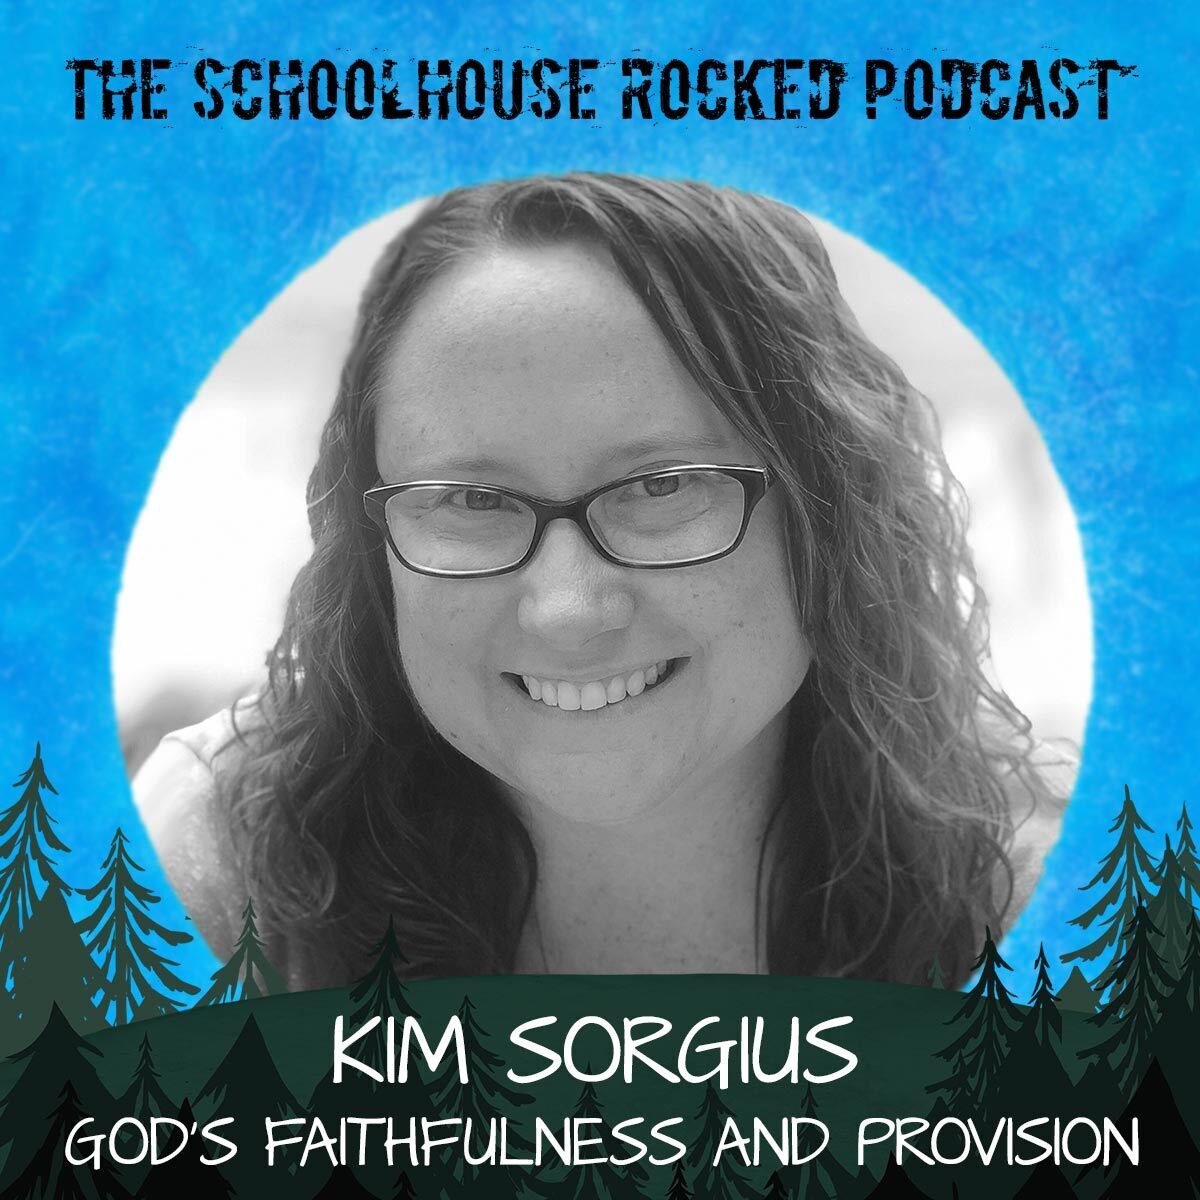 Kim Sorgius - A Story of God's Faithfulness and Provision